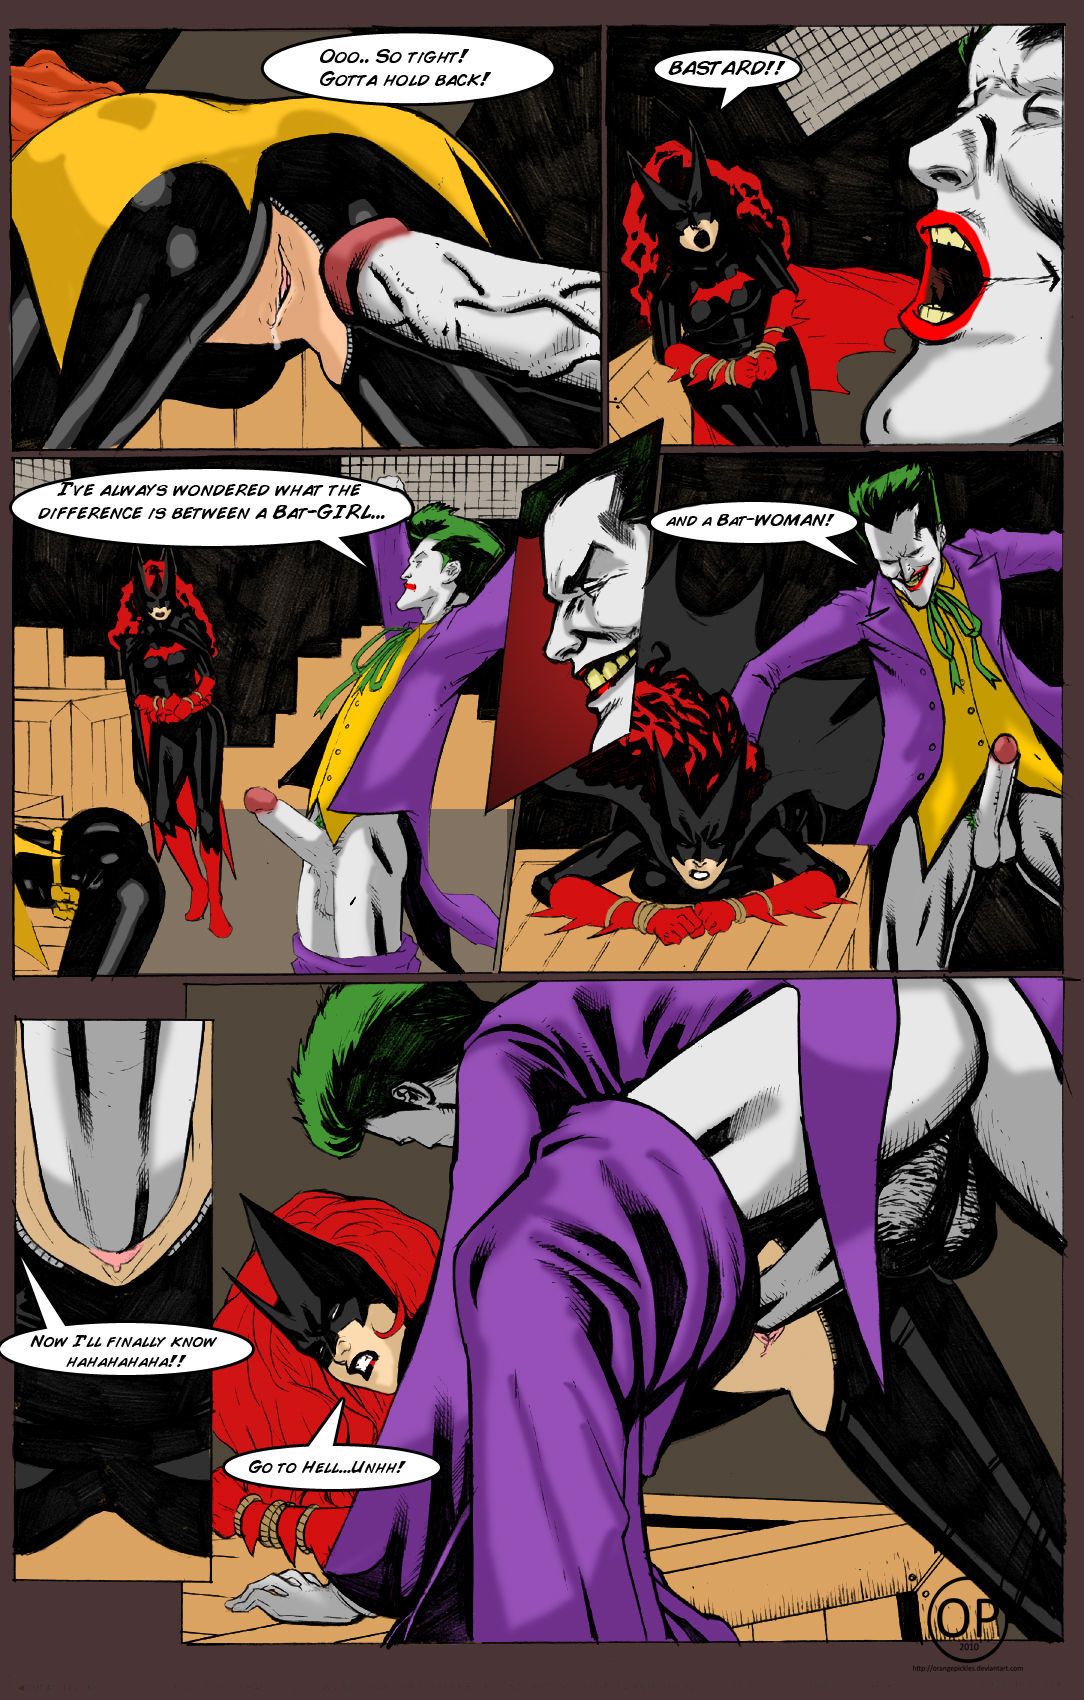 Joker vs batwoman